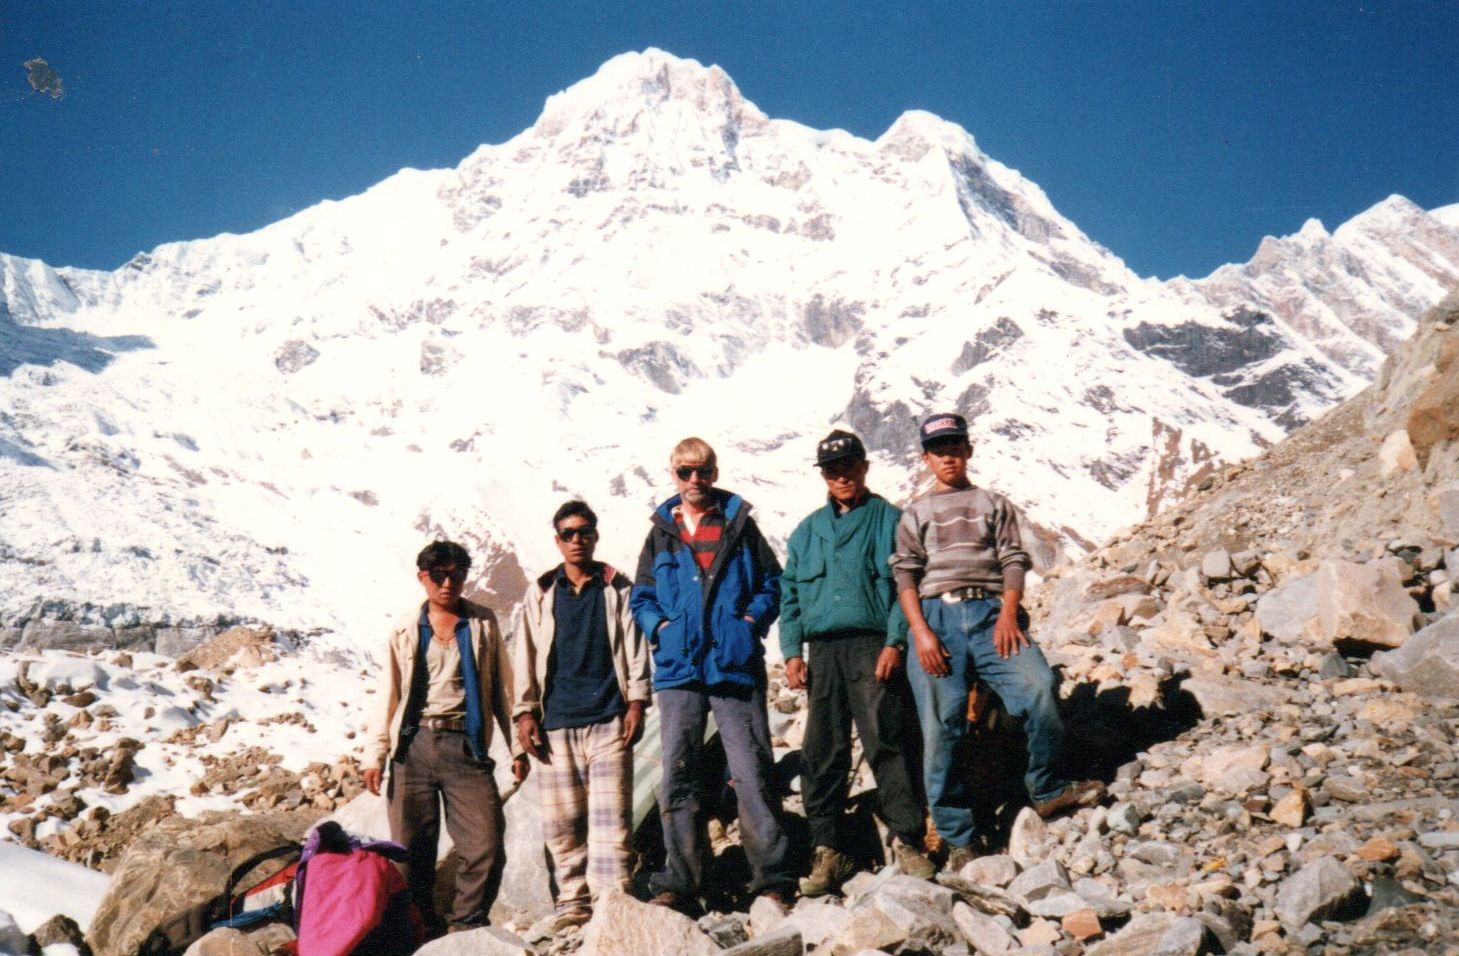 Trekking crew beneath Annapurna South Peak